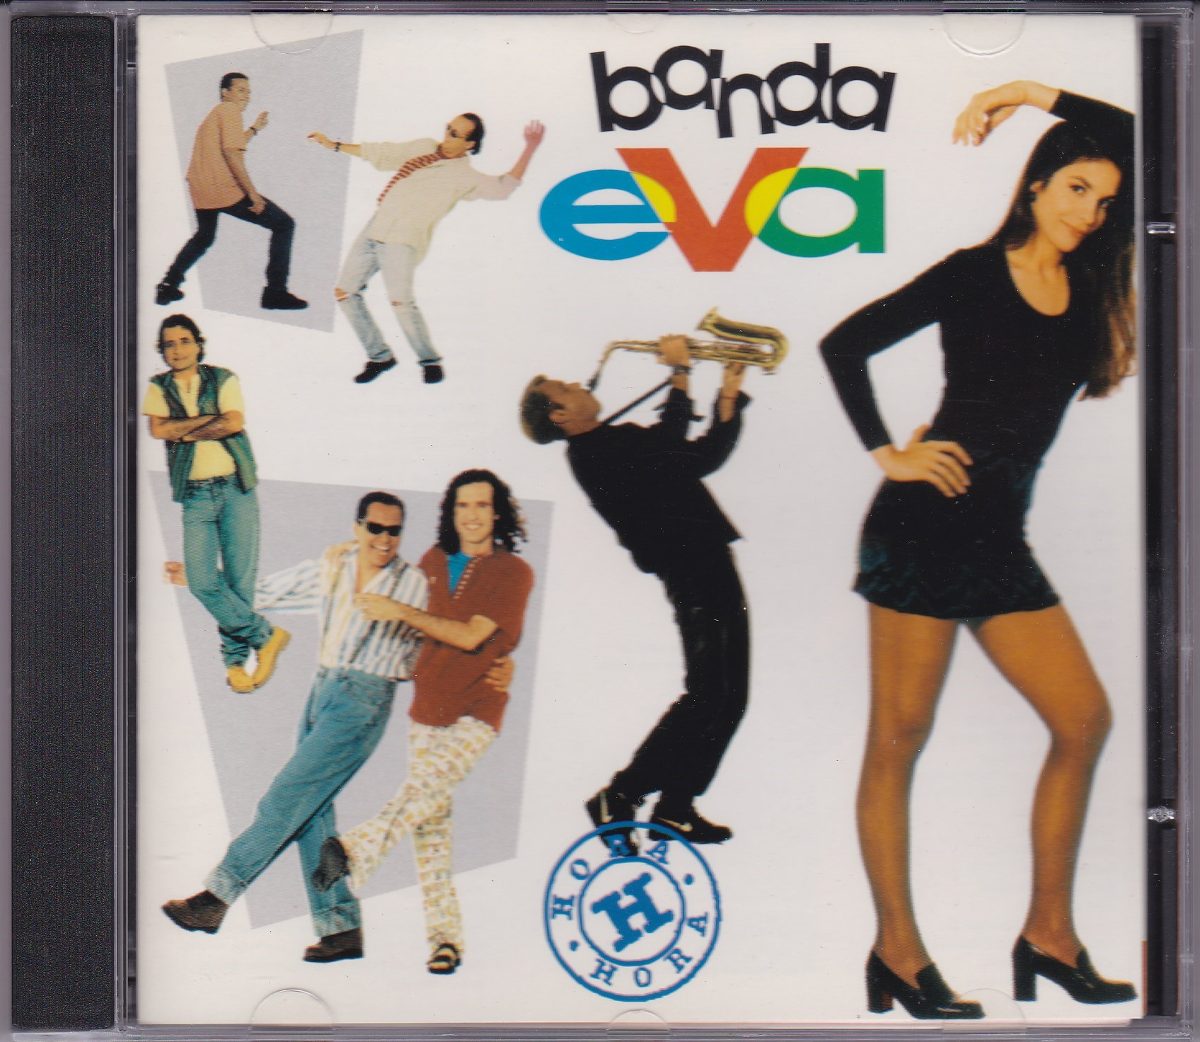 Banda Eva - Cd Hora H - 1995 - ( Ivete Sangalo) - Seminovo 